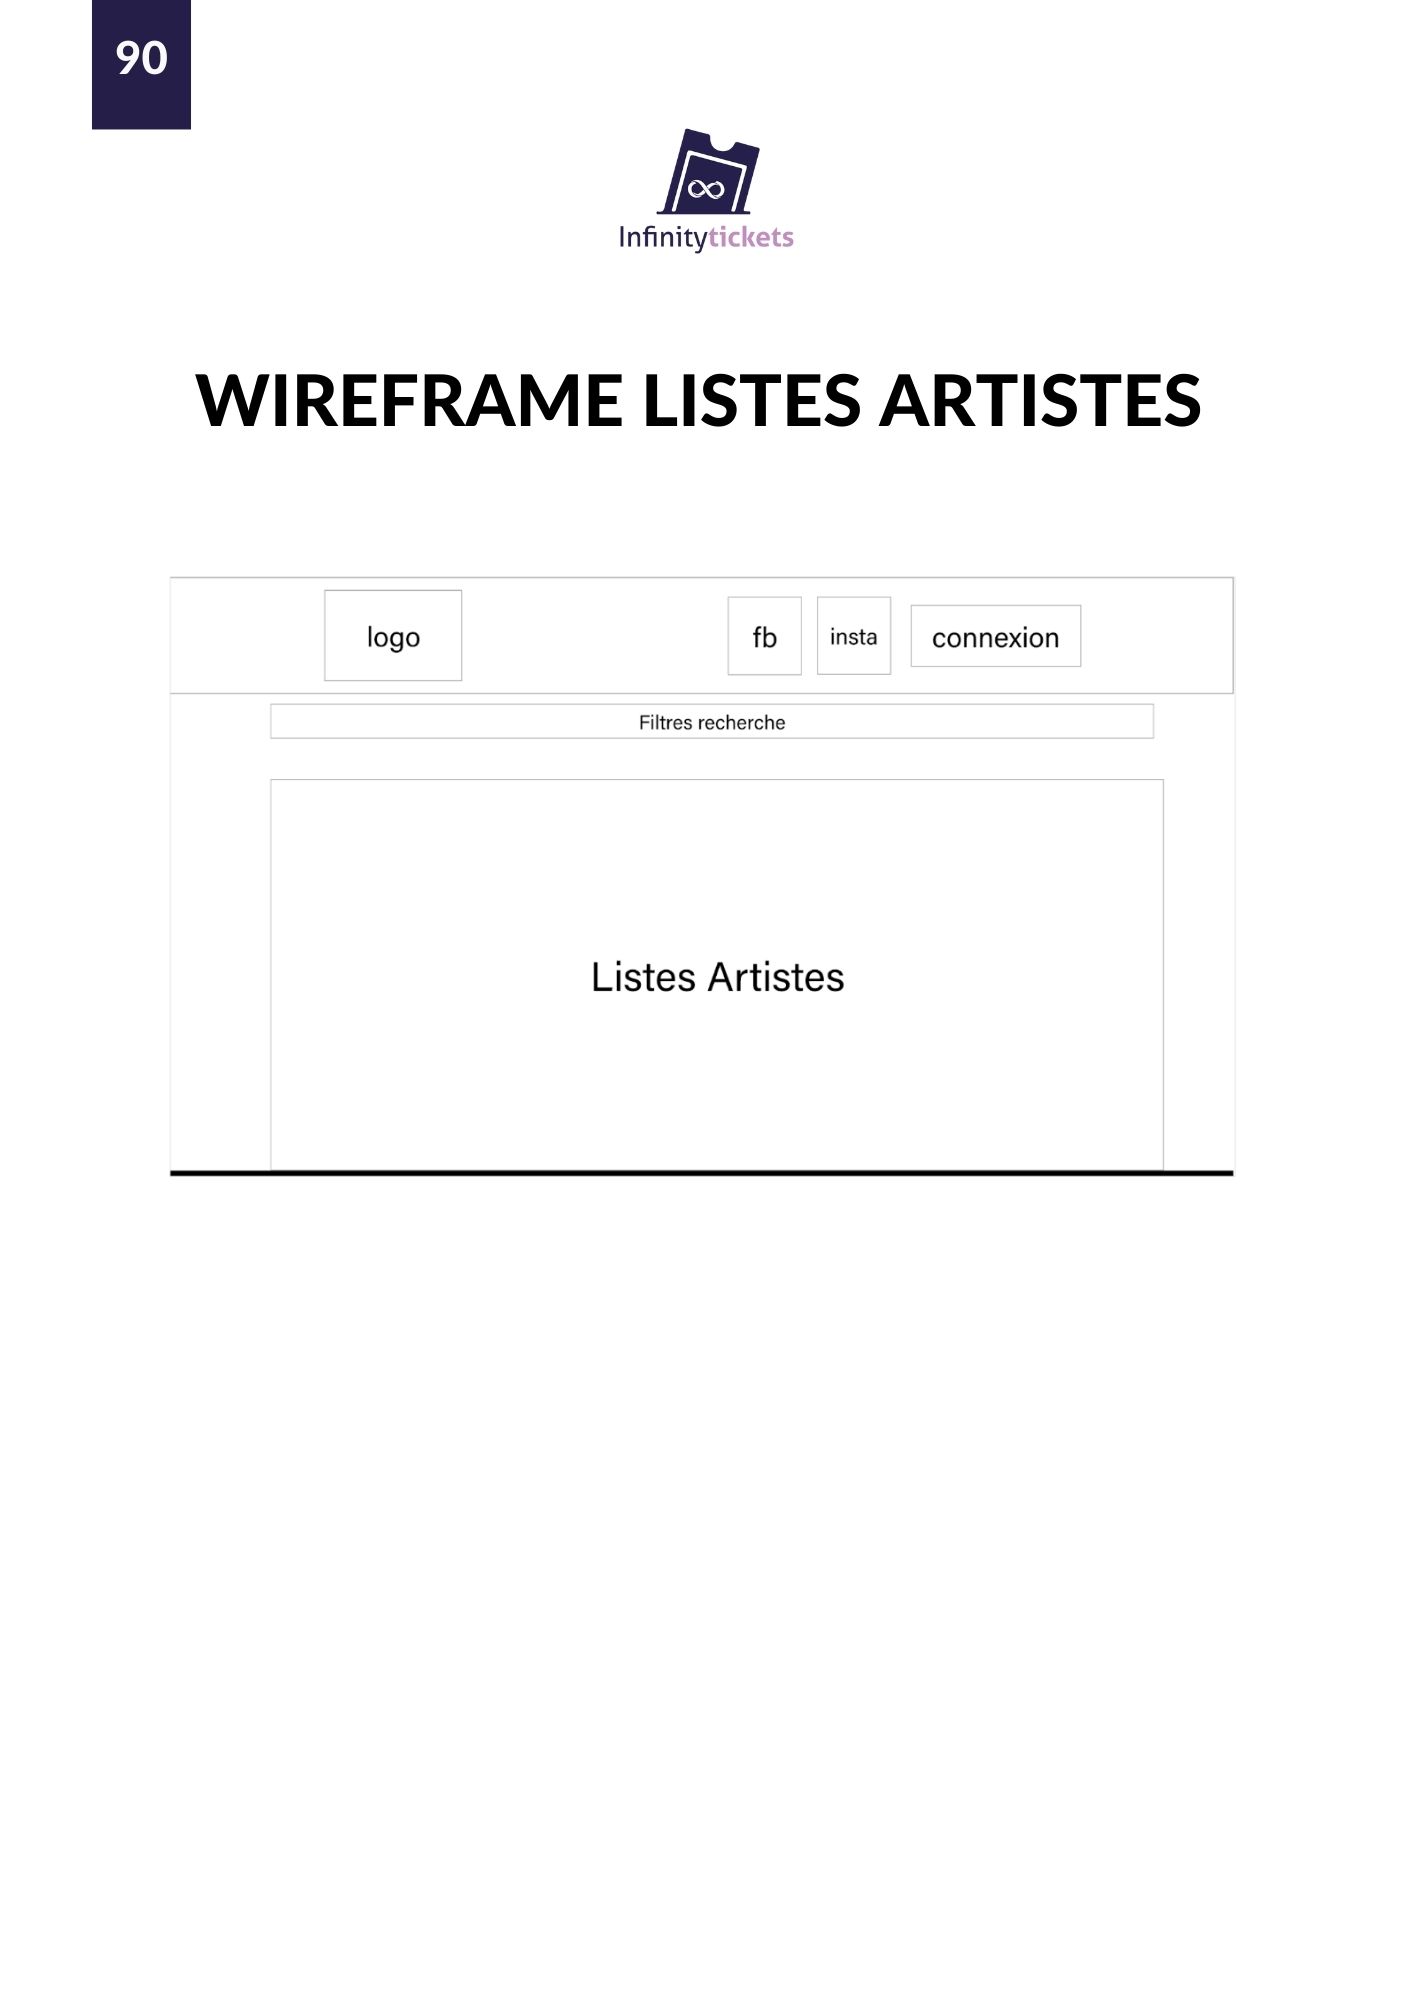 92 wireframe listes artistes